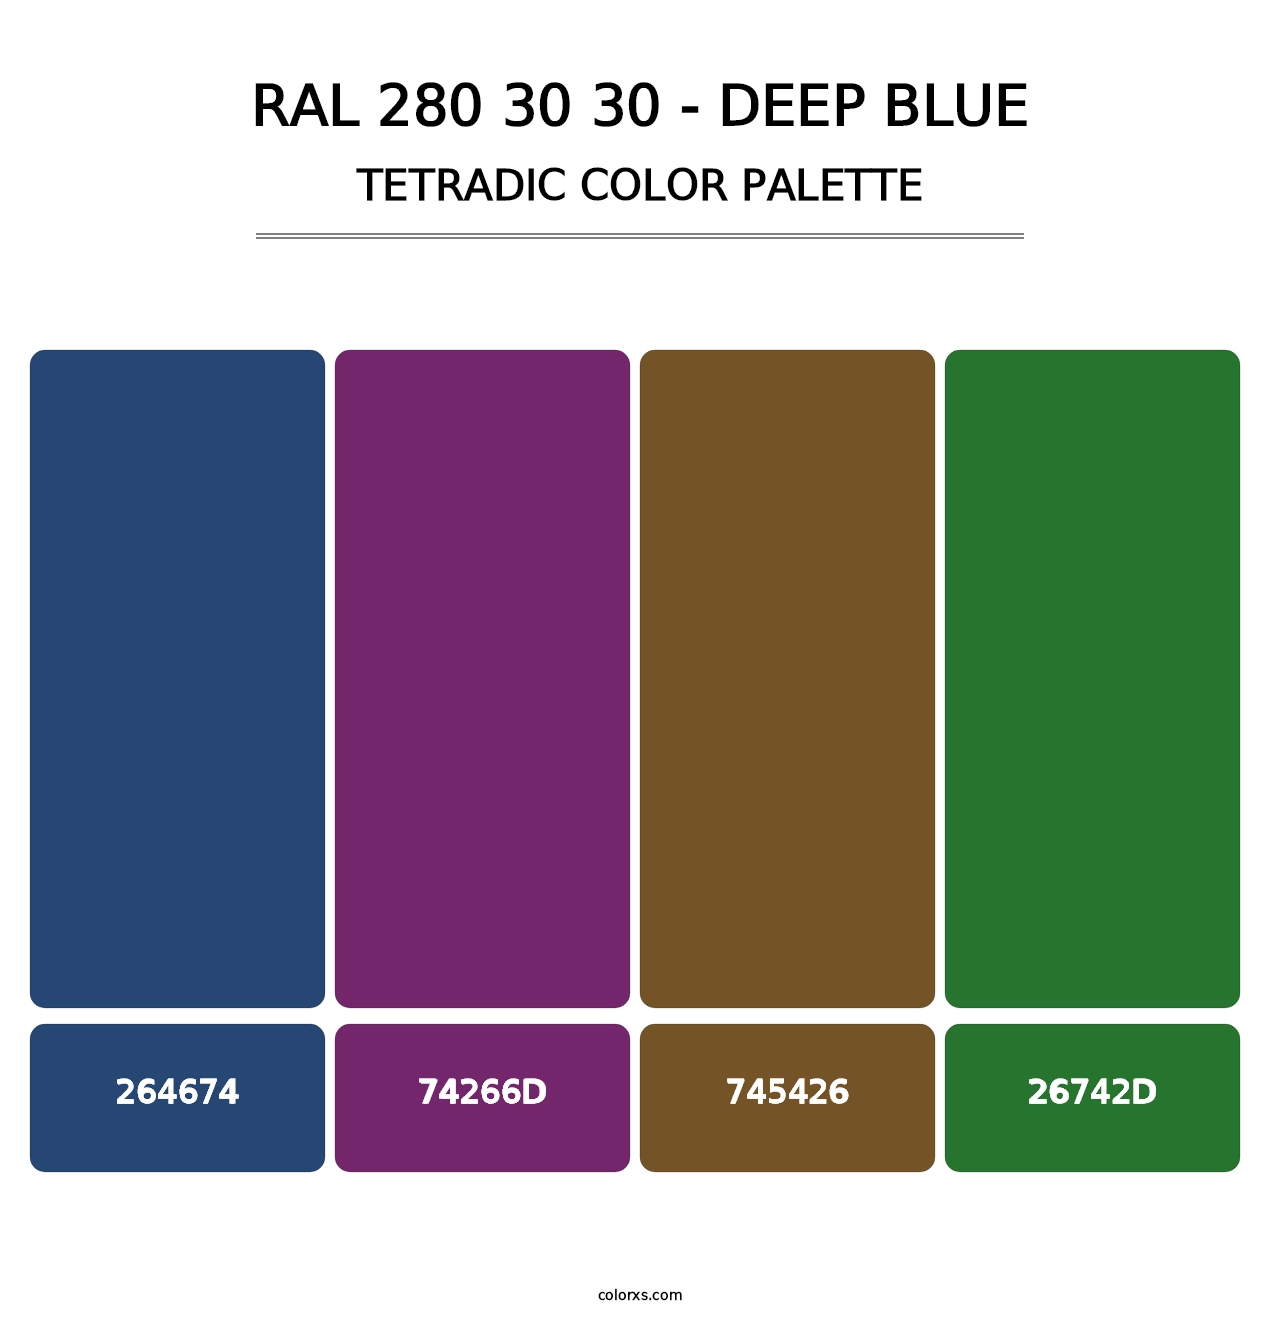 RAL 280 30 30 - Deep Blue - Tetradic Color Palette